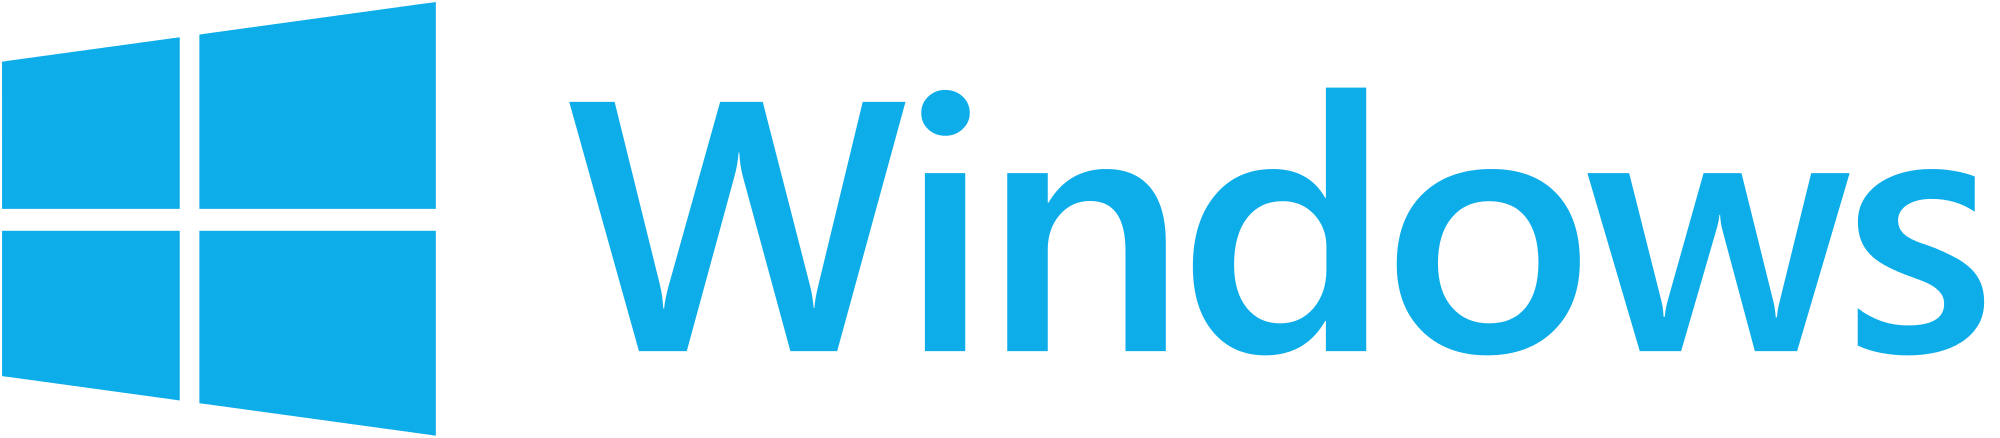 Microsoft Windows Logo - File:Windows logo and wordmark - 2012.svg - Wikimedia Commons